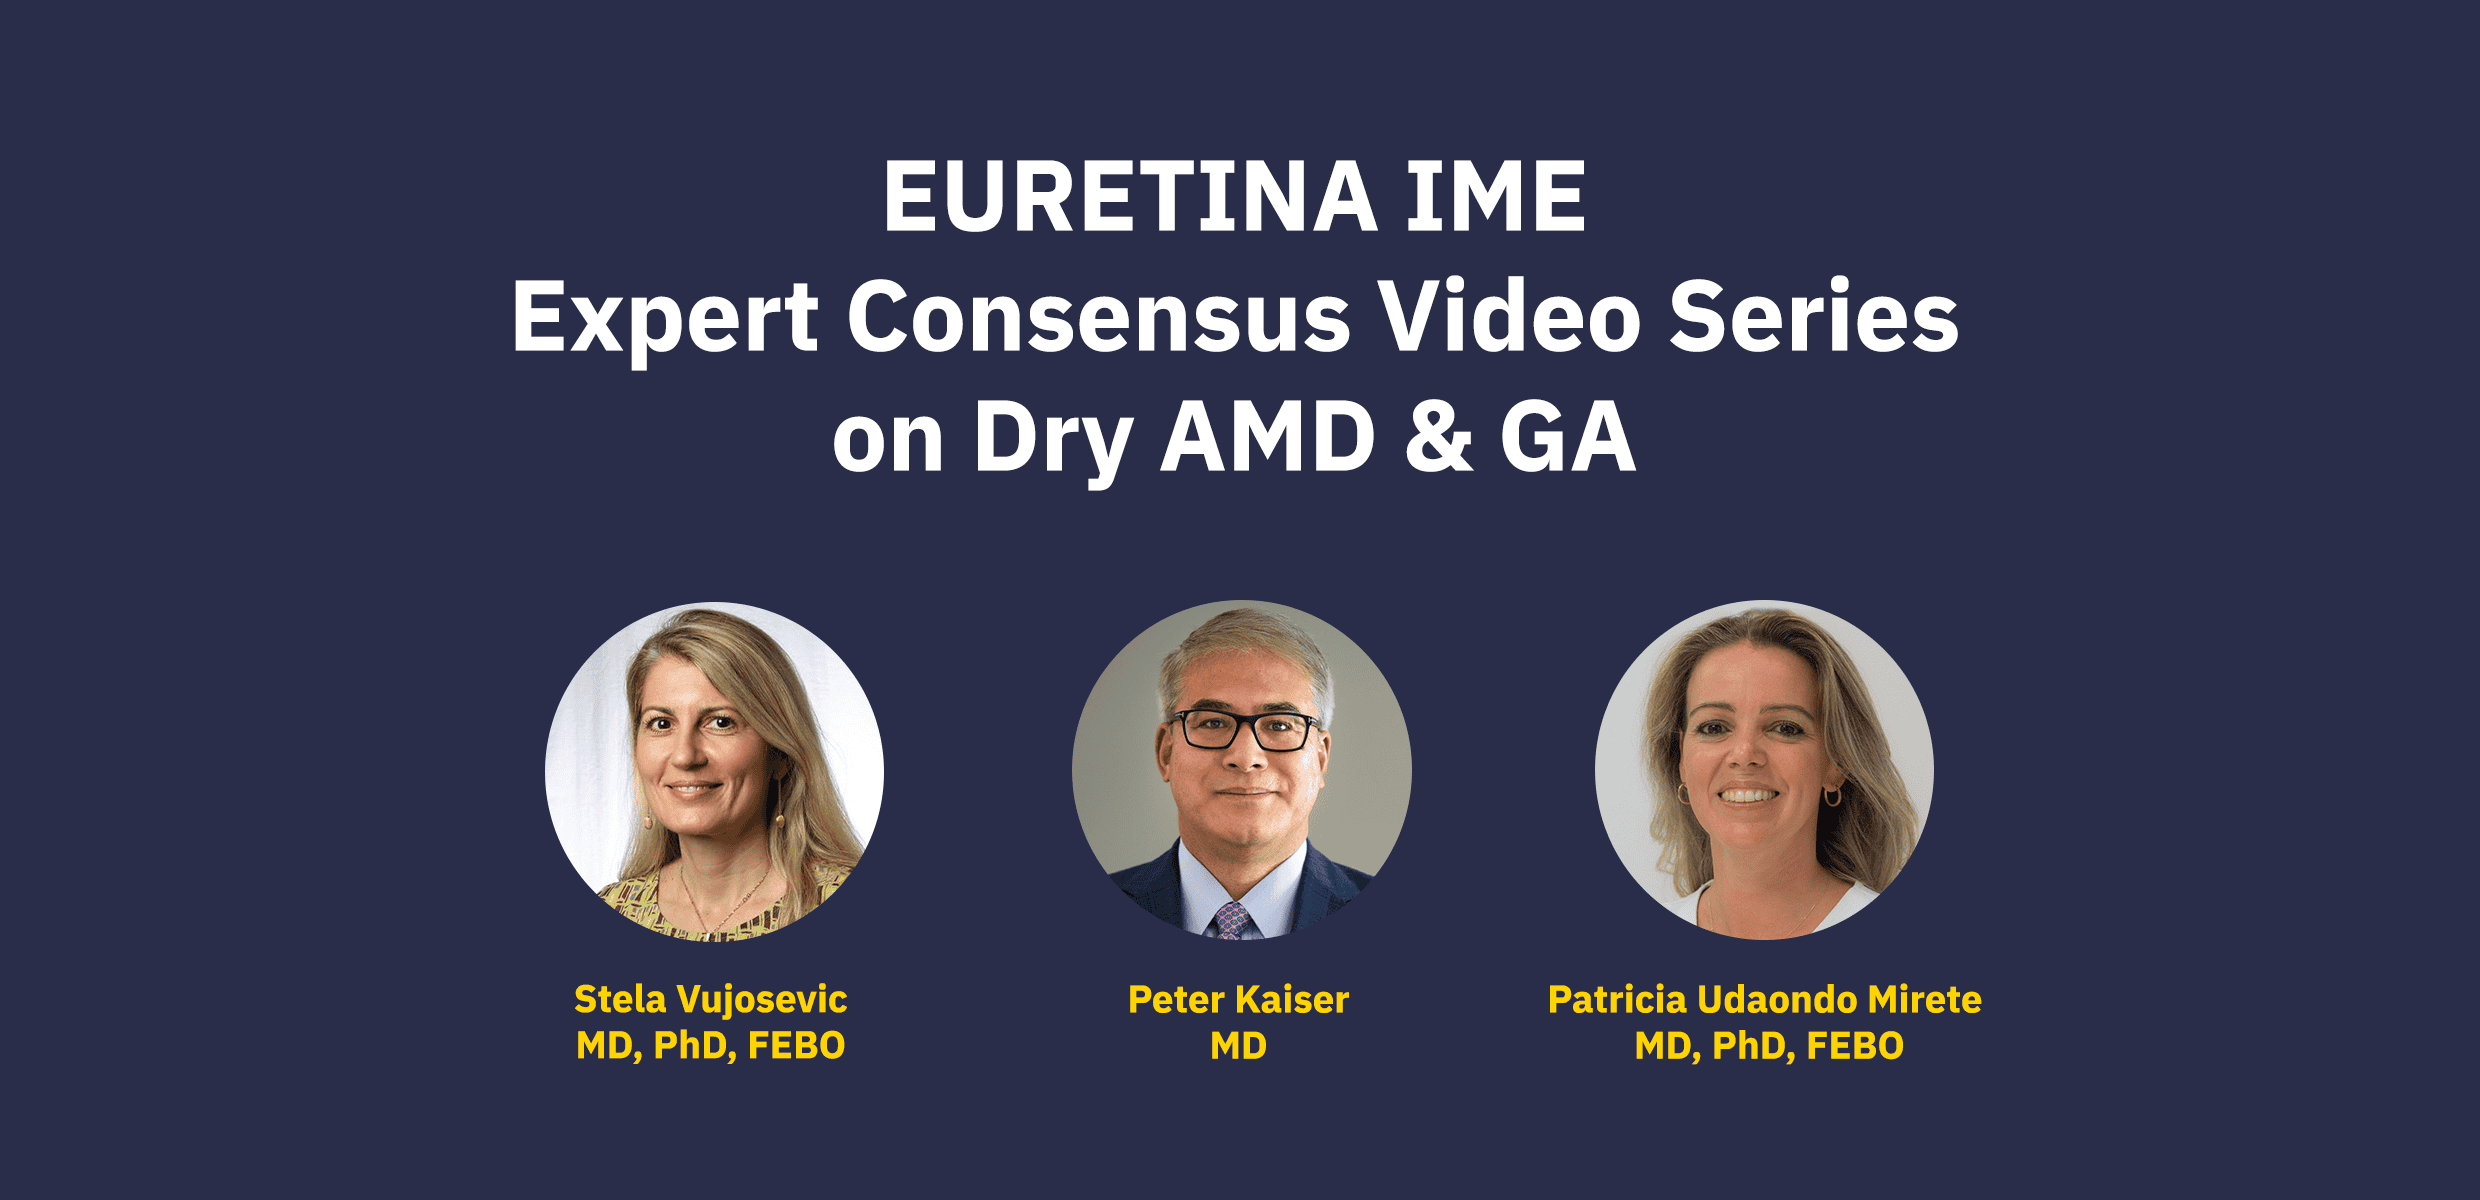 EURETINA IME Expert Consensus Video Series on Dry AMD & GA